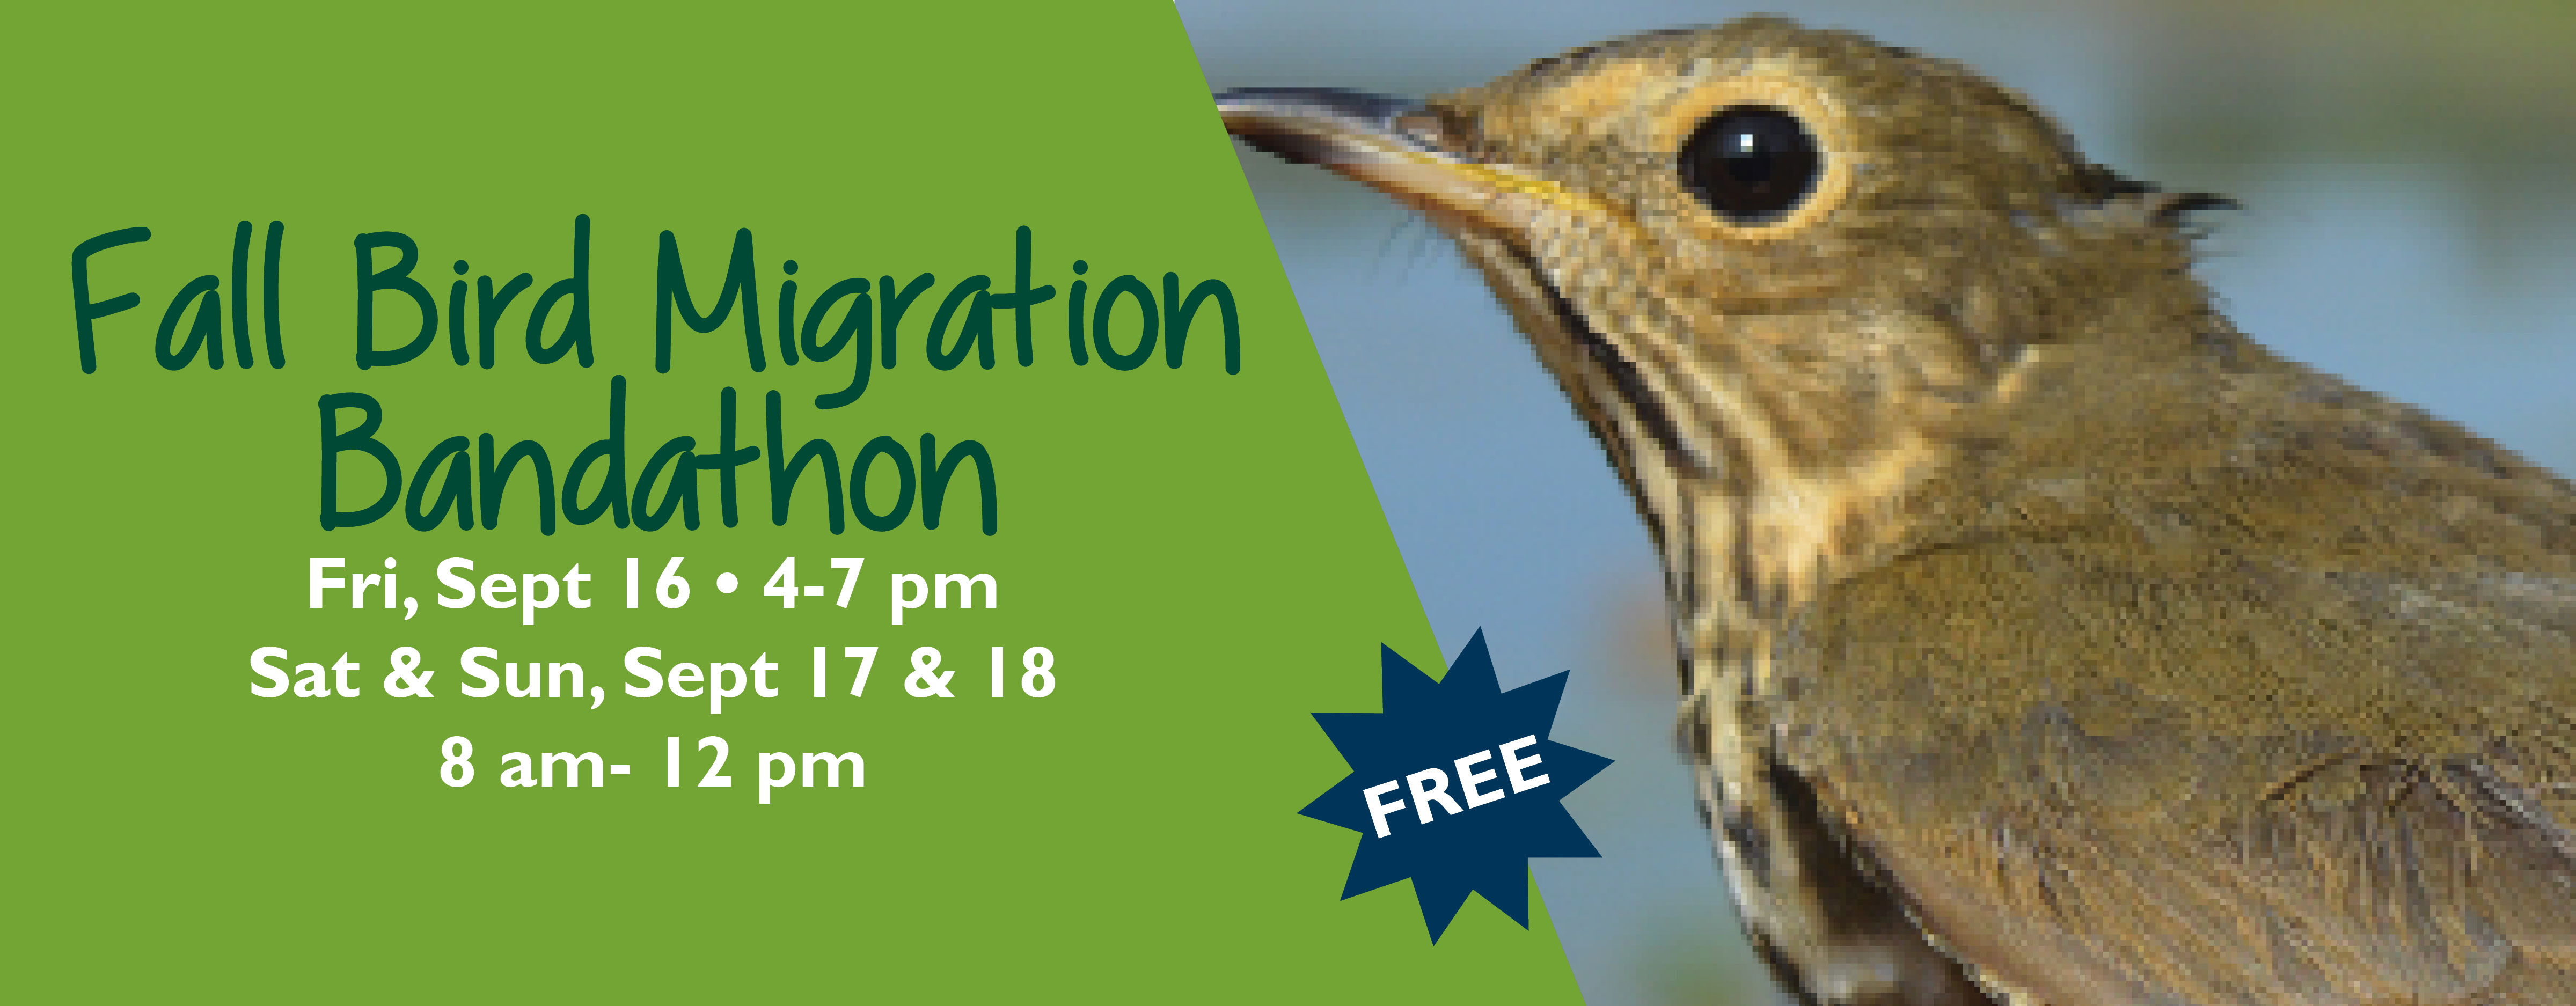 Fall Bird Migration Bandathon, Fri-Sun, Sept 16-18